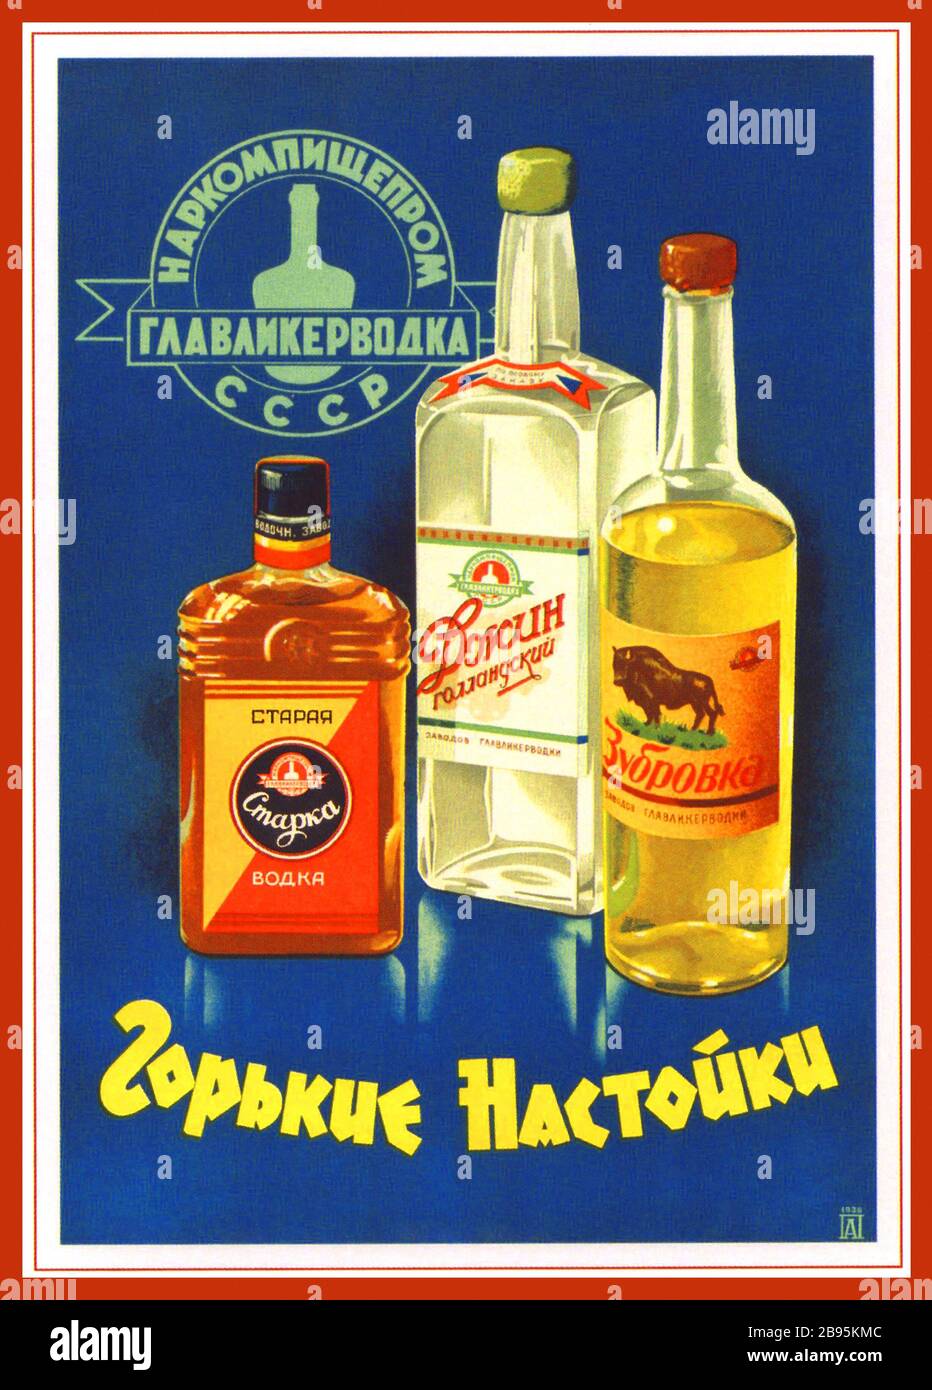 VODKA URSS VINTAGE RUSO 1930 Imprimir Publicidad en la URSS Publicidad vodka en la URSS RETRO URSS BEBIDAS ALCOHÓLICAS SOVIÉTICAS PRODUCTOS CCCP Foto de stock